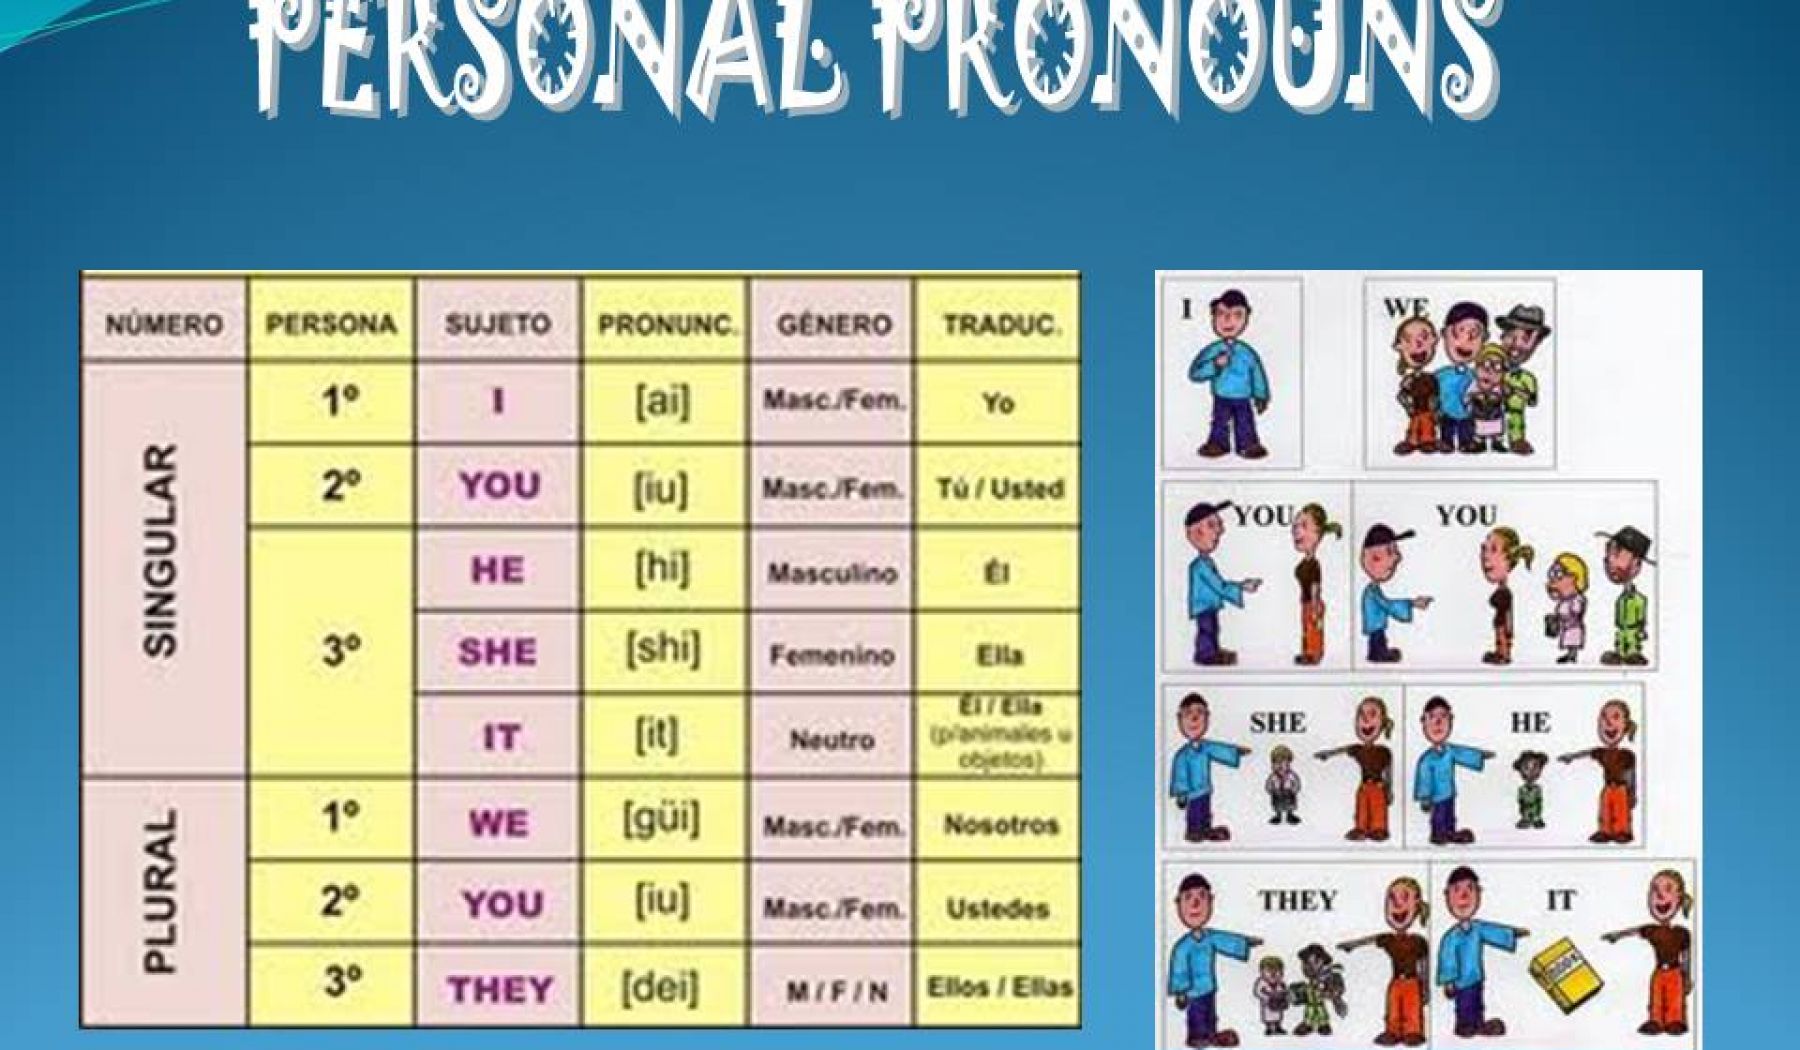 Pronouns wordwall for kids. Personal pronouns. Personal pronouns (личные местоимения). Personal pronouns таблица. Местоимения в английском.